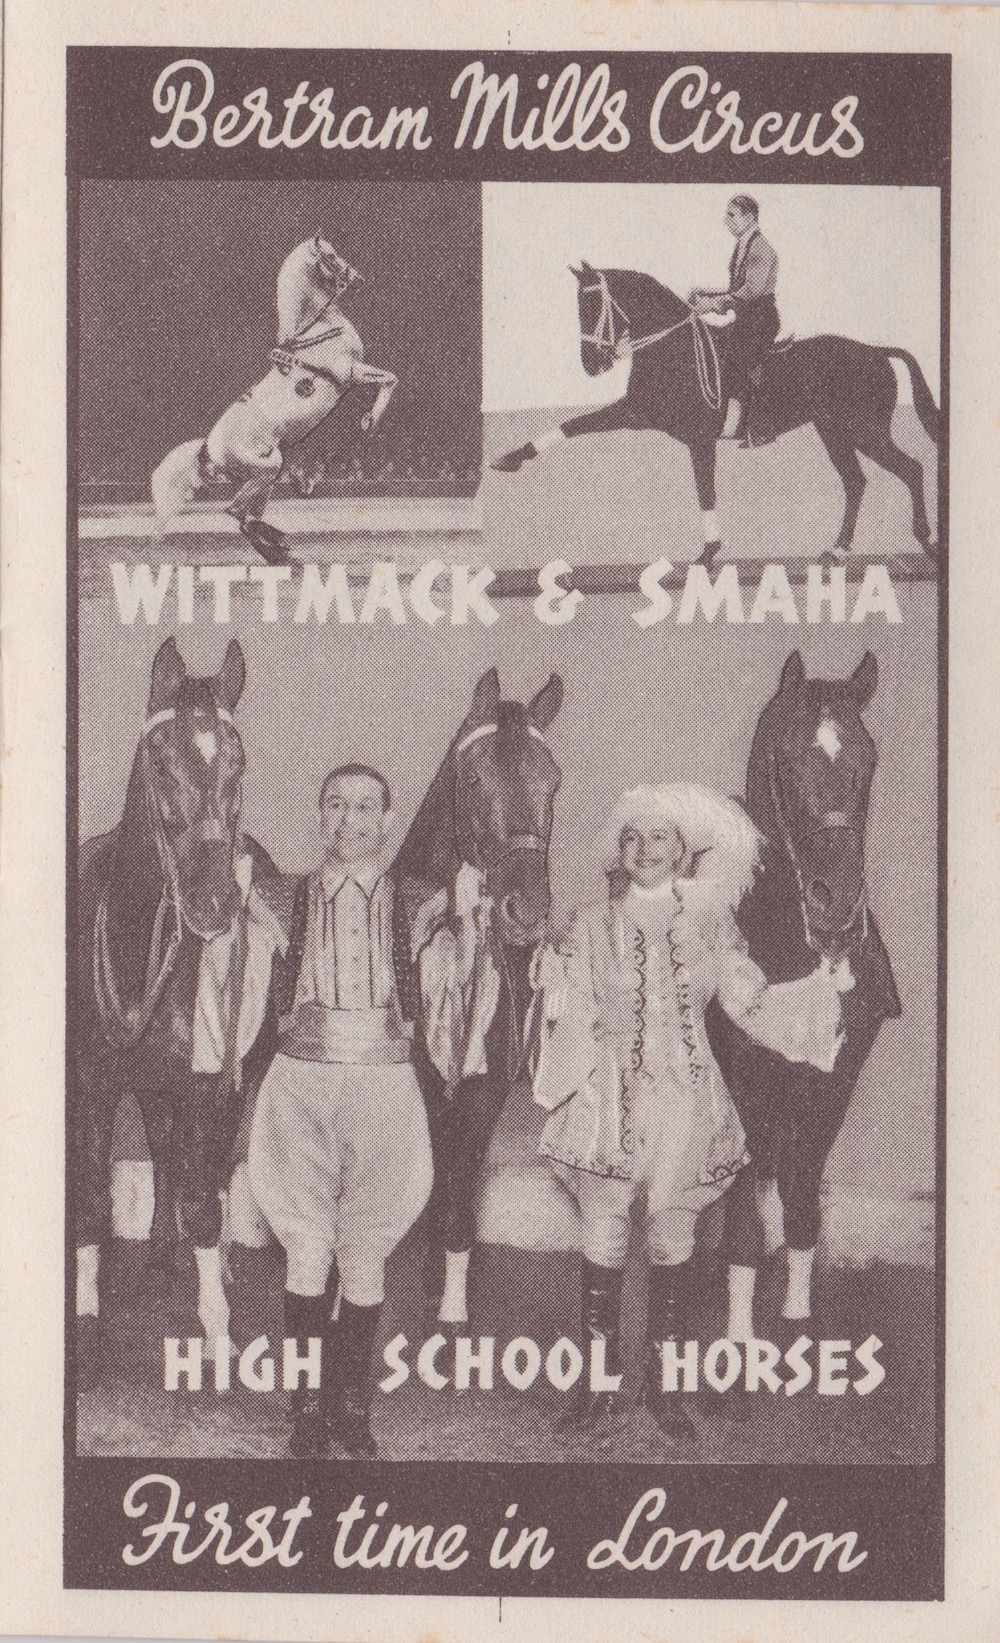 Bertram Mills Circus Dec 17 1948 Wittmack and Smaha High School Horses